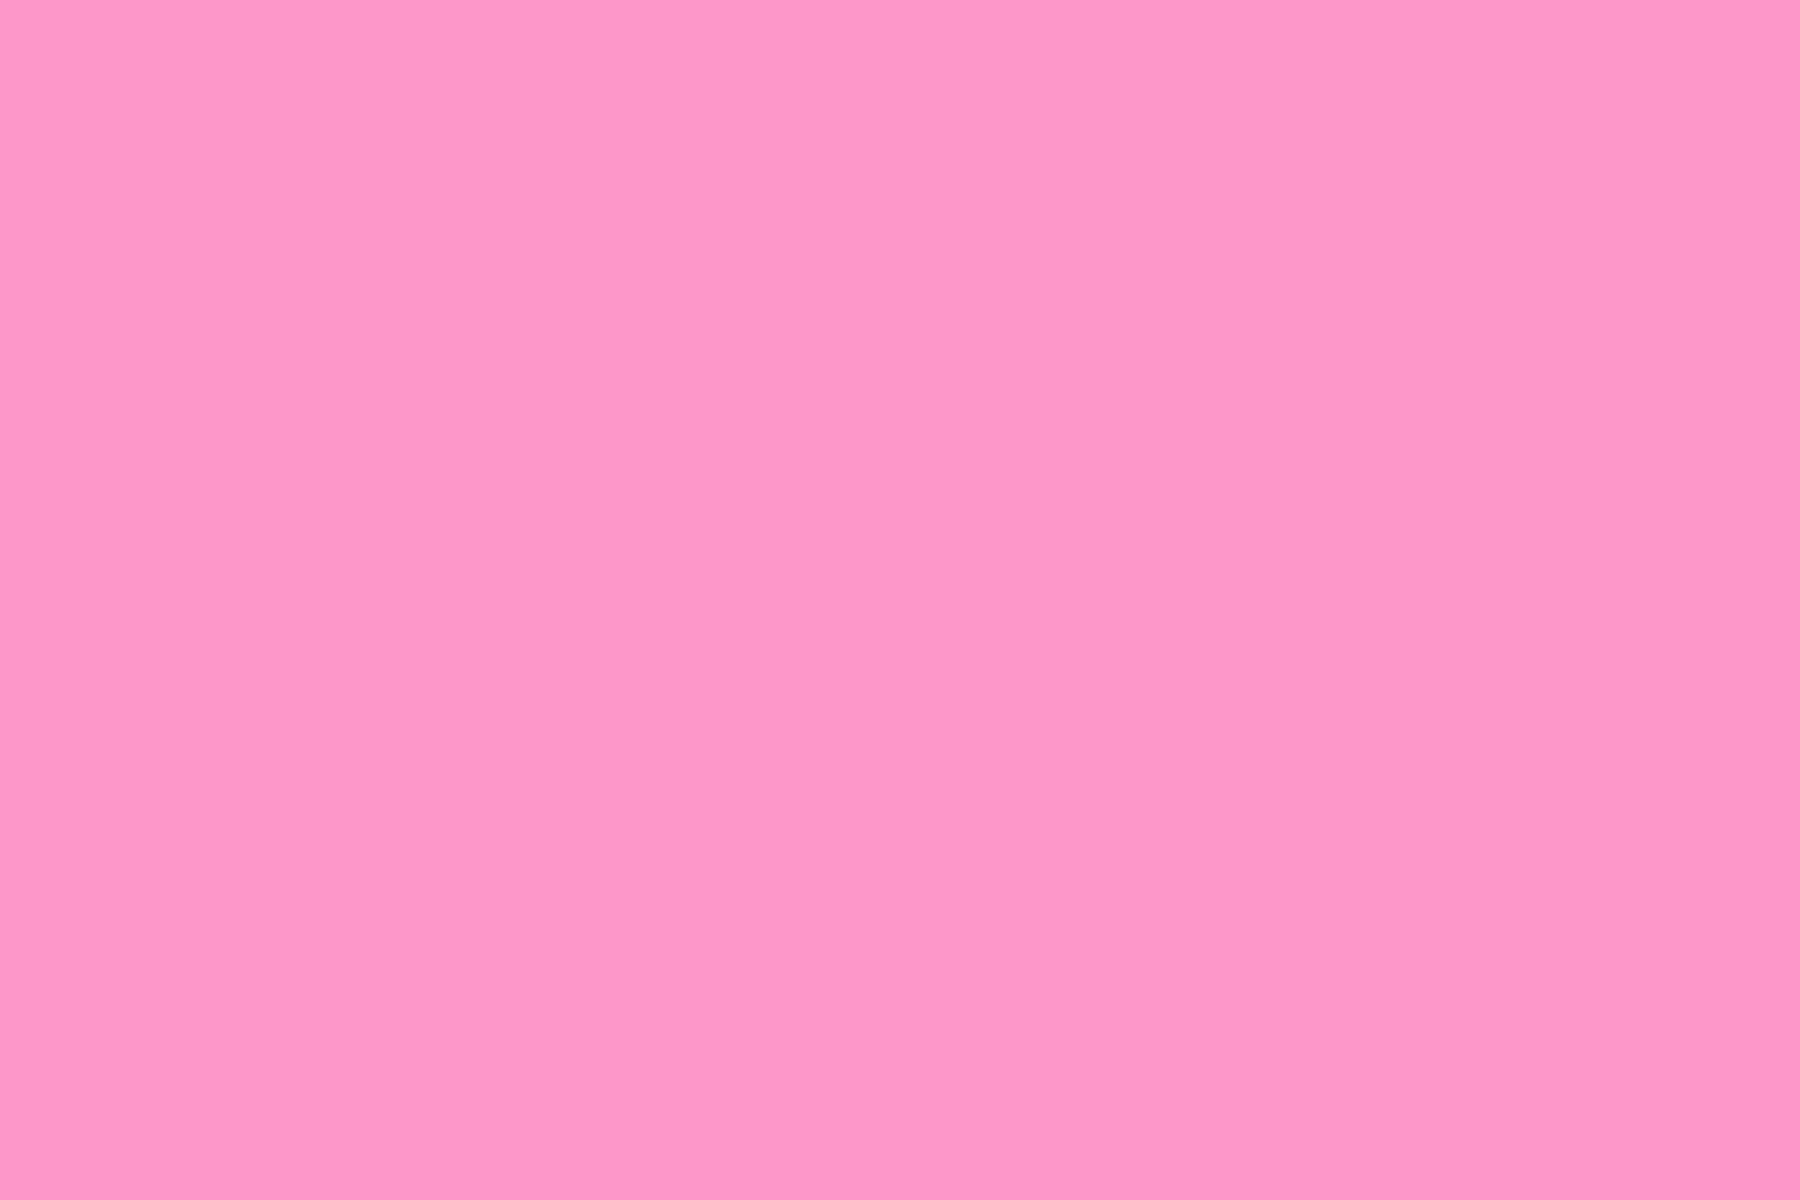 Plain Pink Background 19122 1800x1200 px